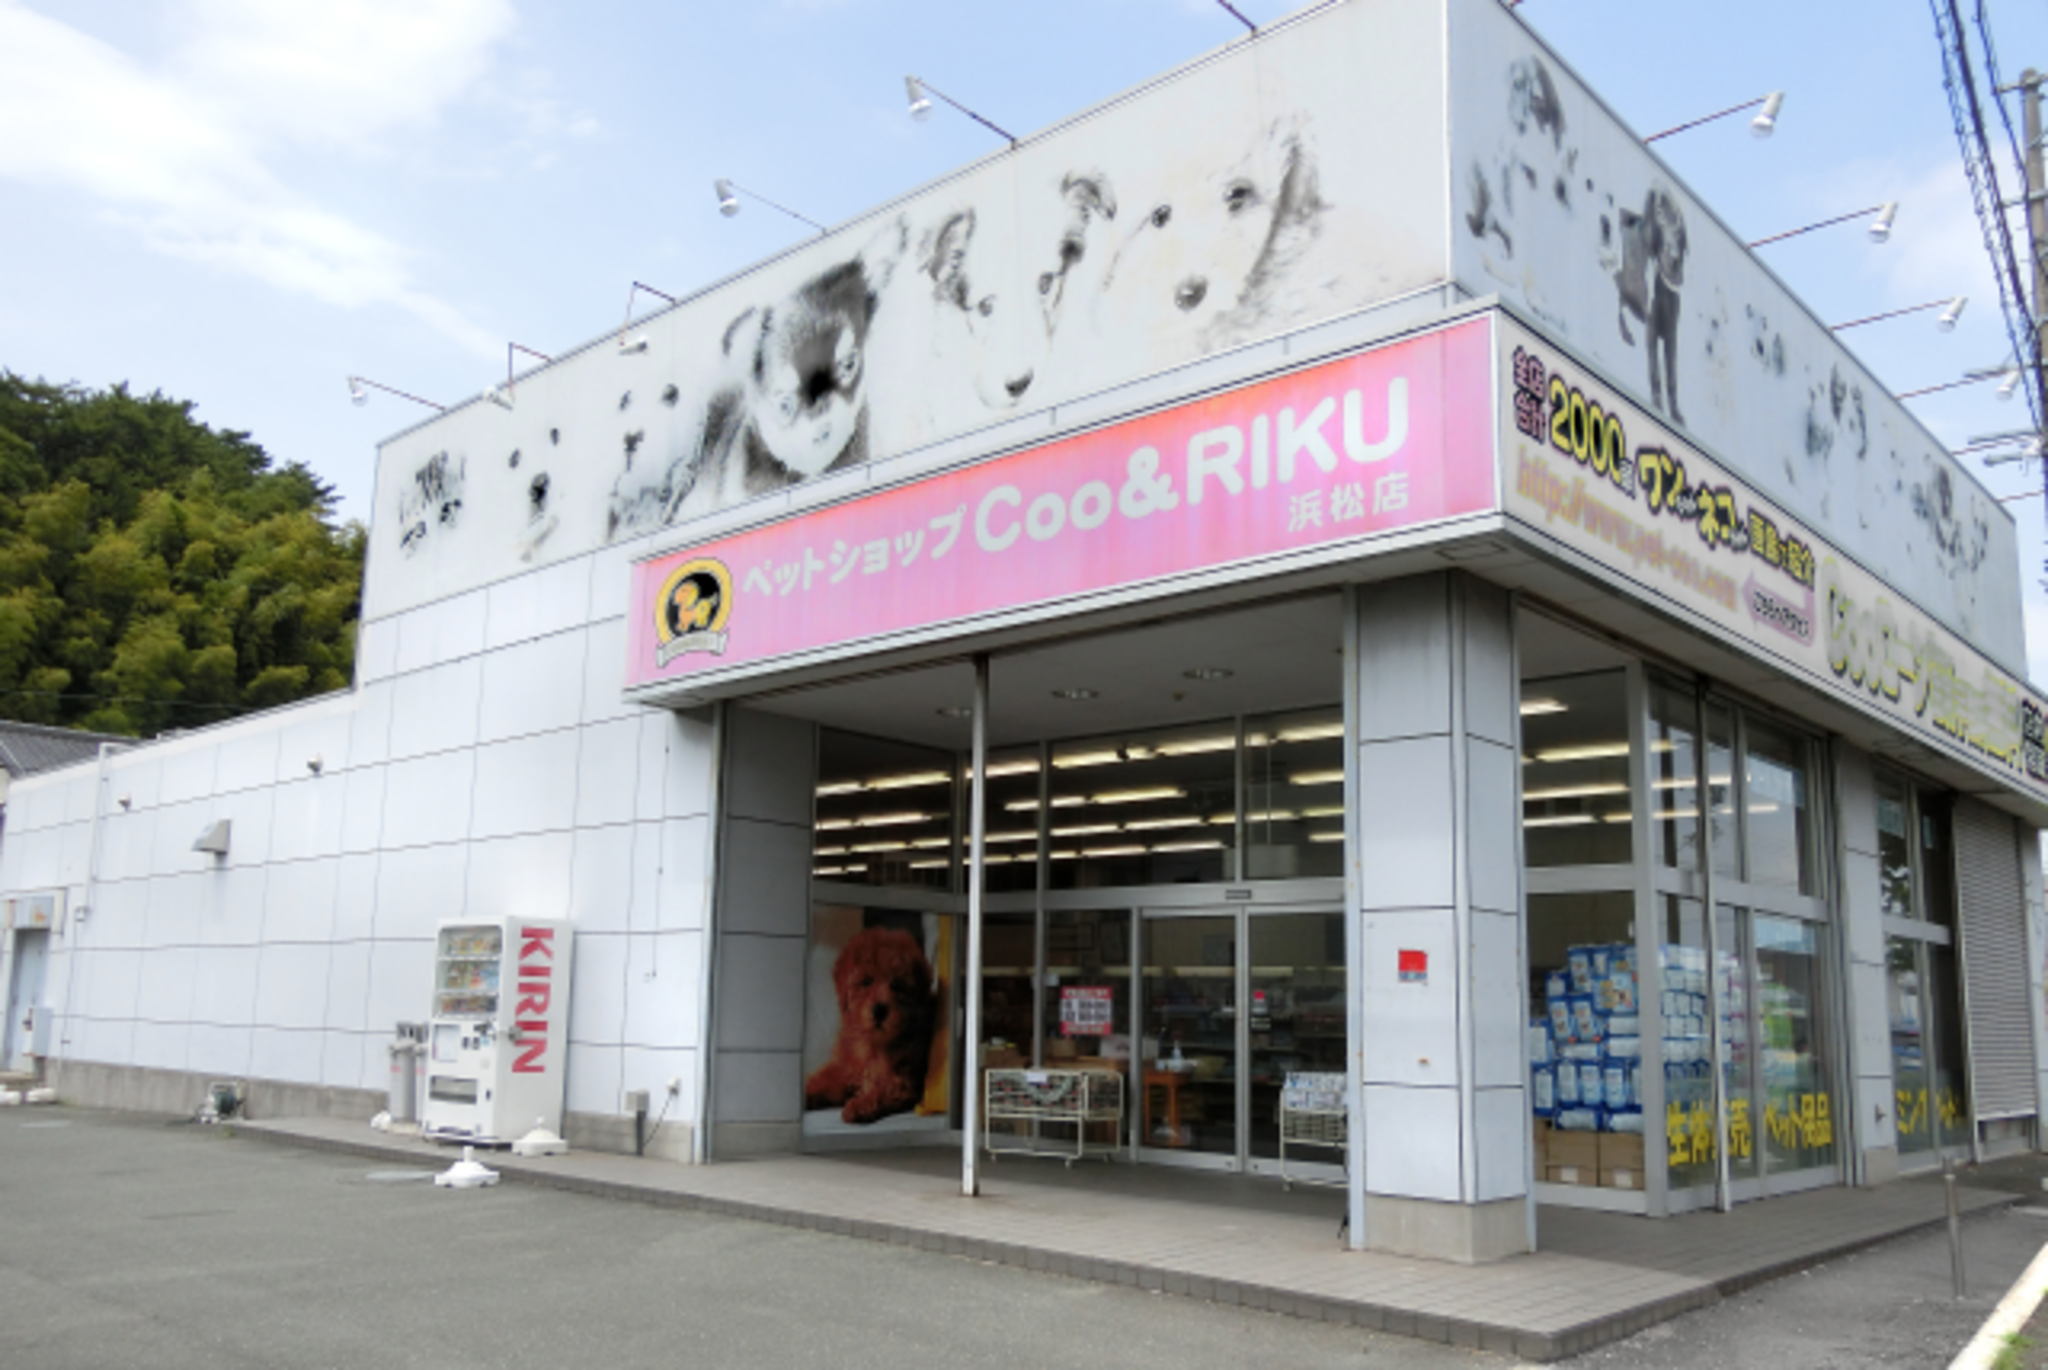 COO&RIKU 浜松店の代表写真1